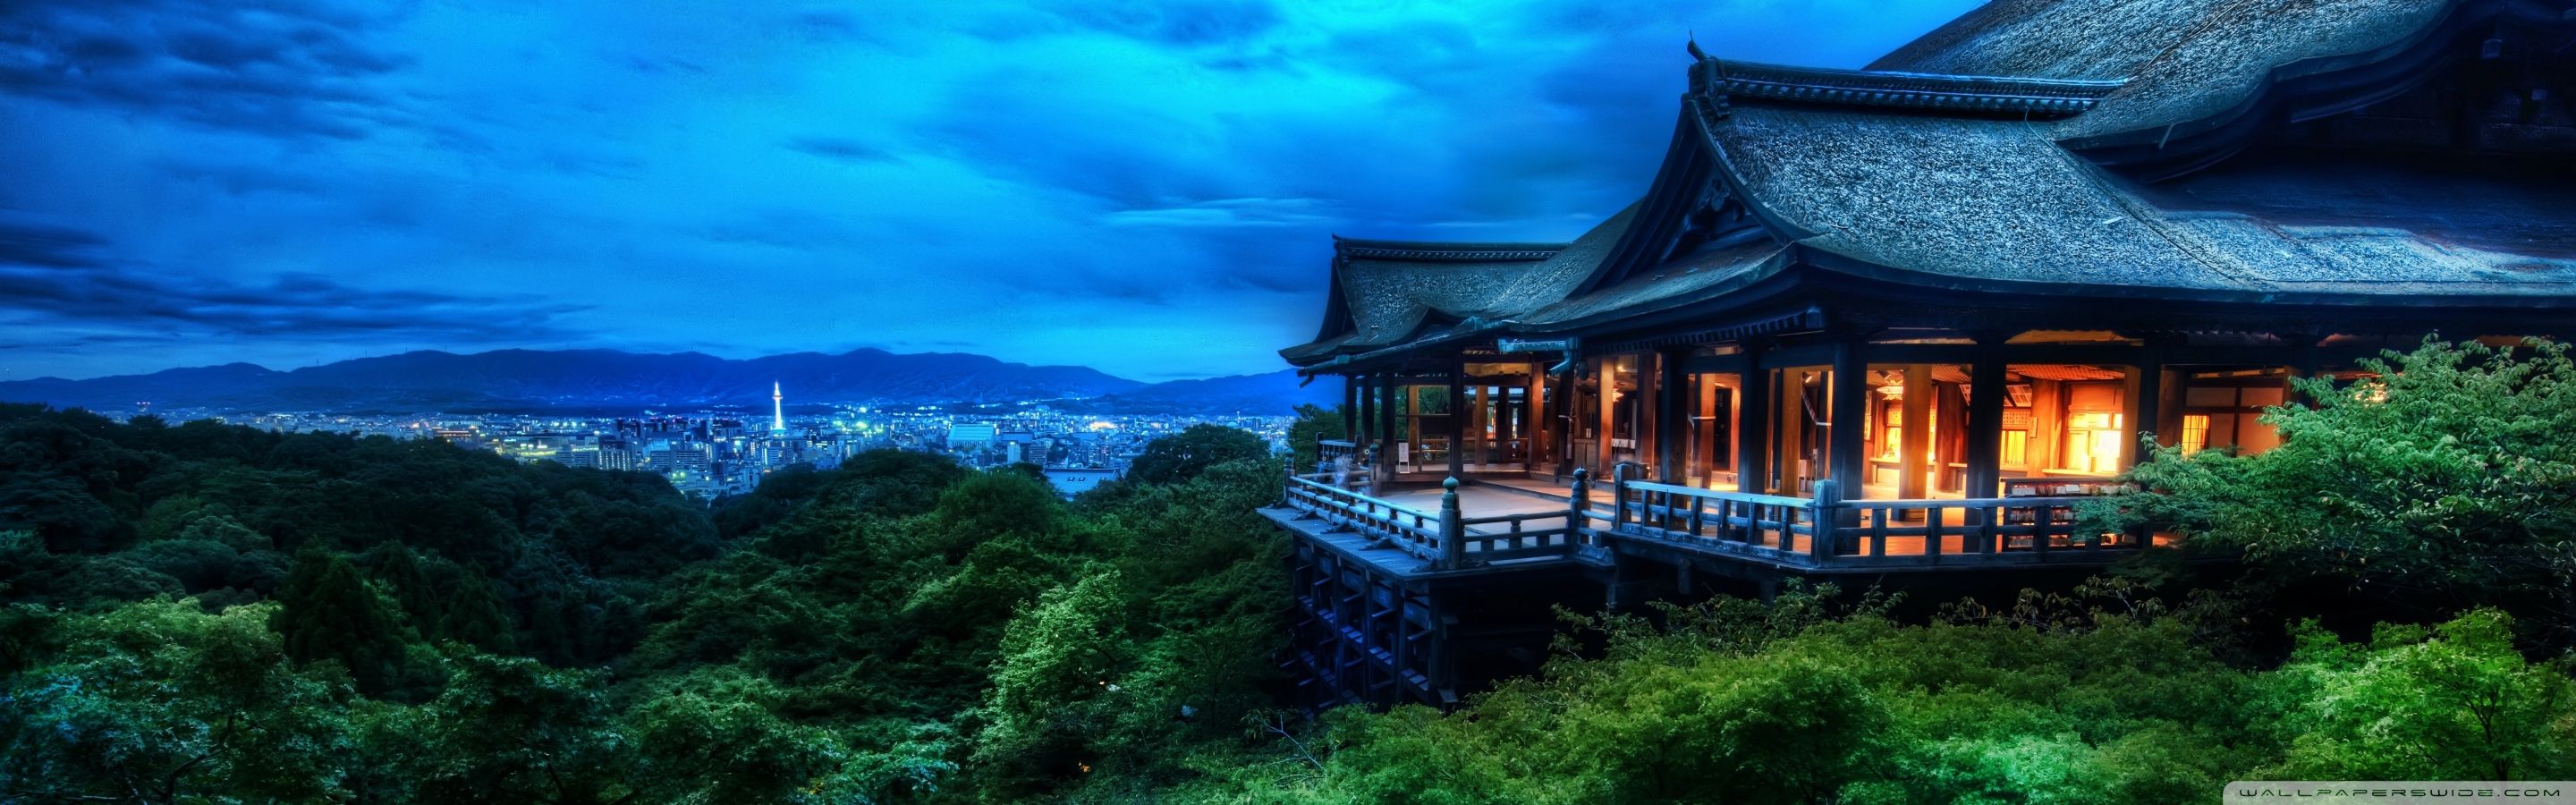 Kyoto, Japan At Night ❤ 4k Hd Desktop Wallpaper For - Kiyomizu-dera - HD Wallpaper 